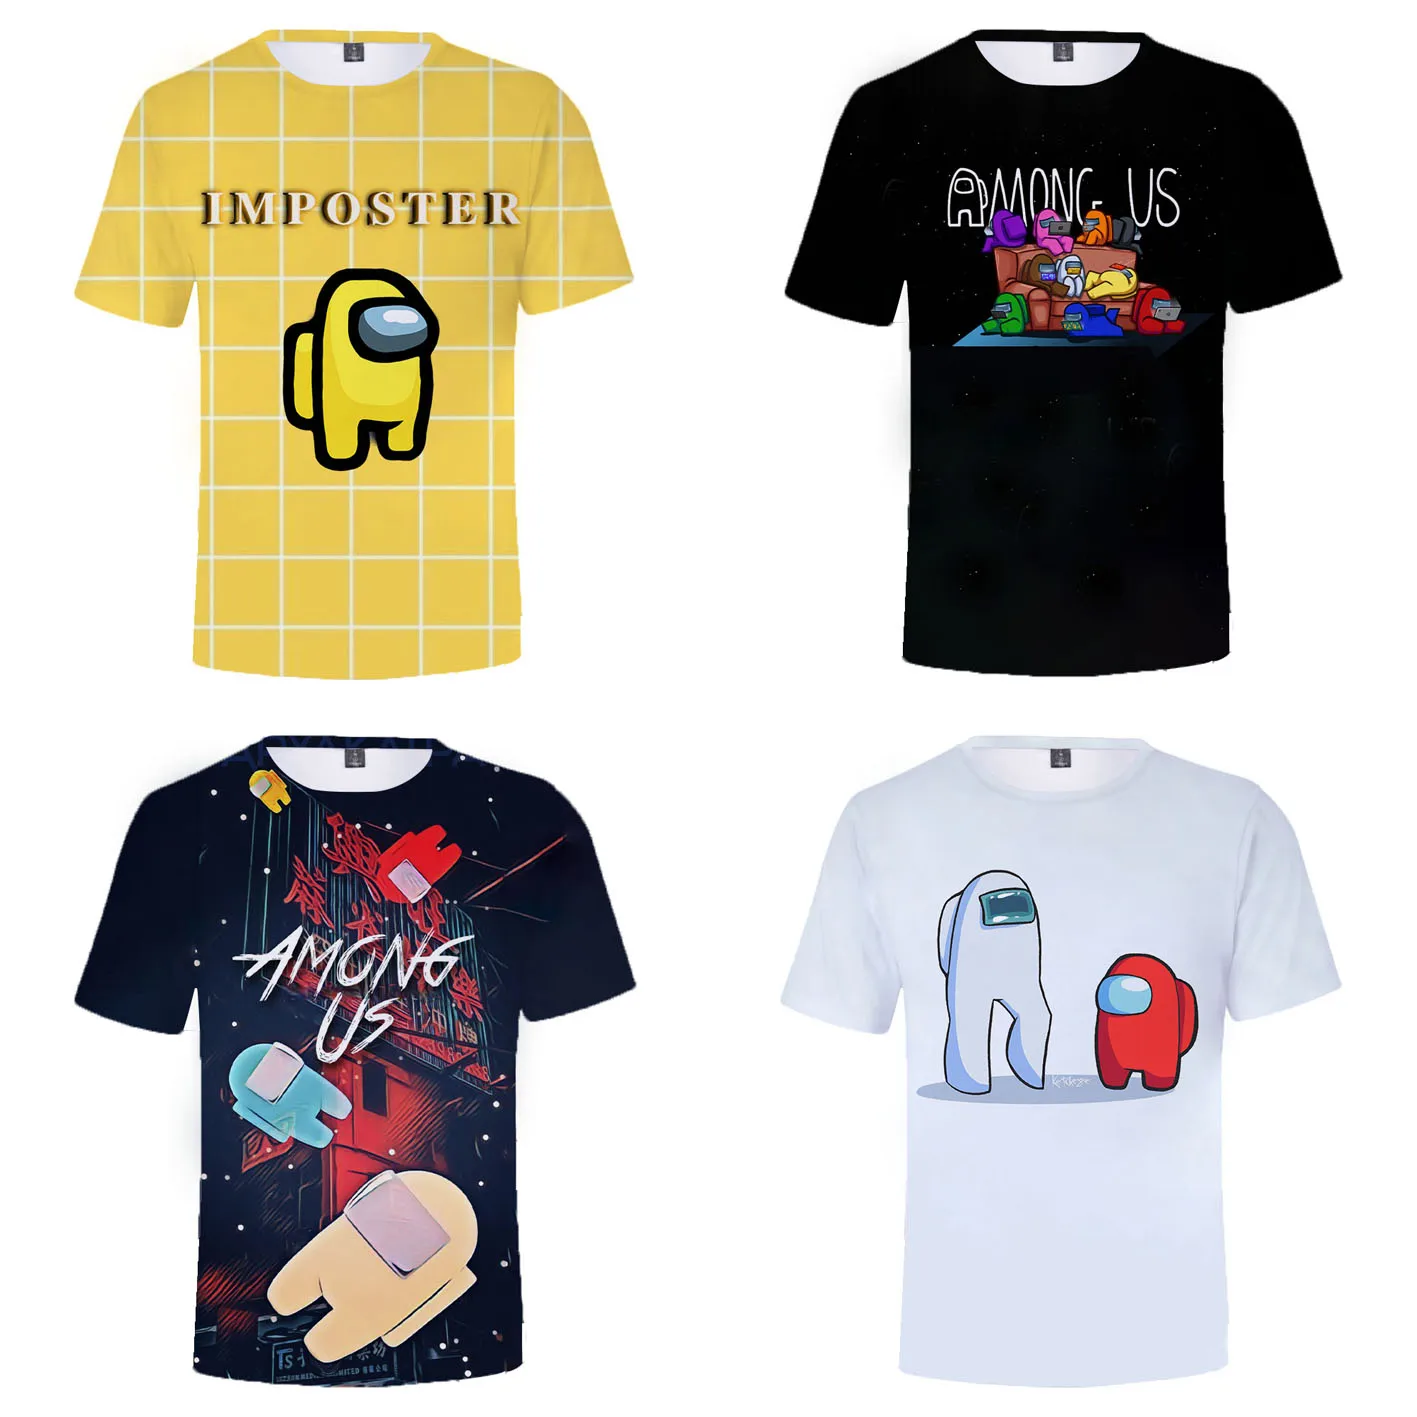 

Kawaii New Game Among Us T Shirt children 2020 Funny Summer Tops Cartoon T-shirt Impostor Graphic Tees Hip Hop Unisex Tshirt kid